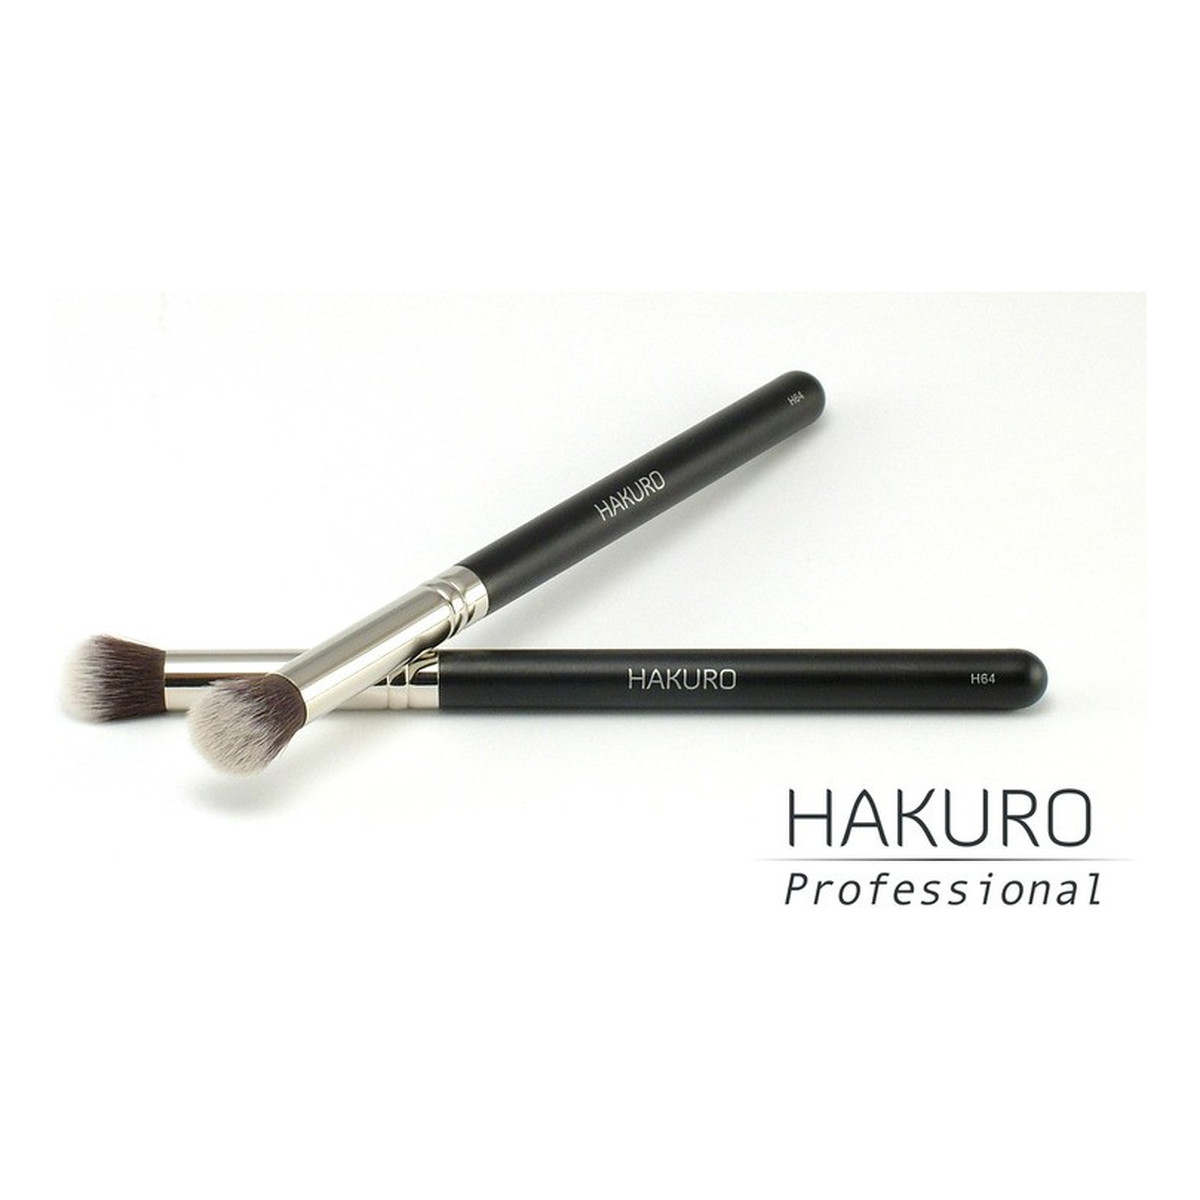 Hakuro H64 Pędzel do nakładania cieni i cieniowania